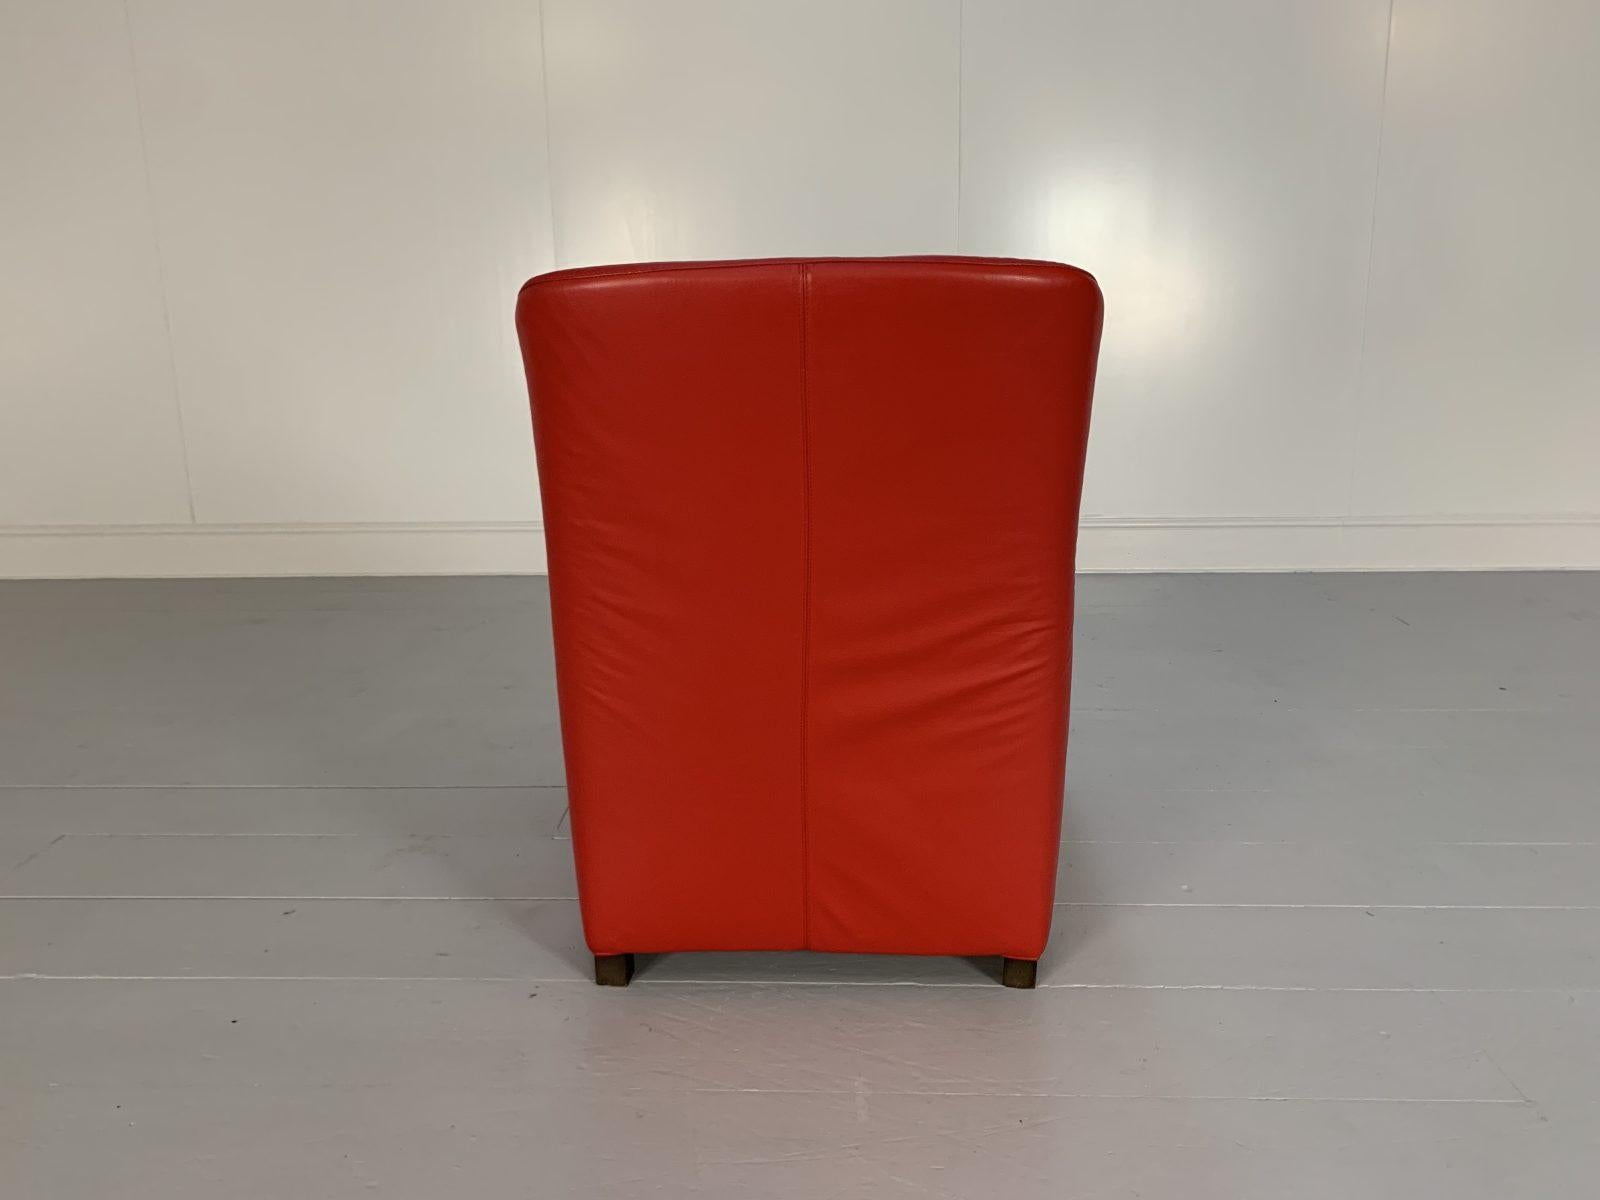 B&B Italia Armchairs, “Maxalto Kalos 9750”, in Red “Gamma” Leather For Sale 3